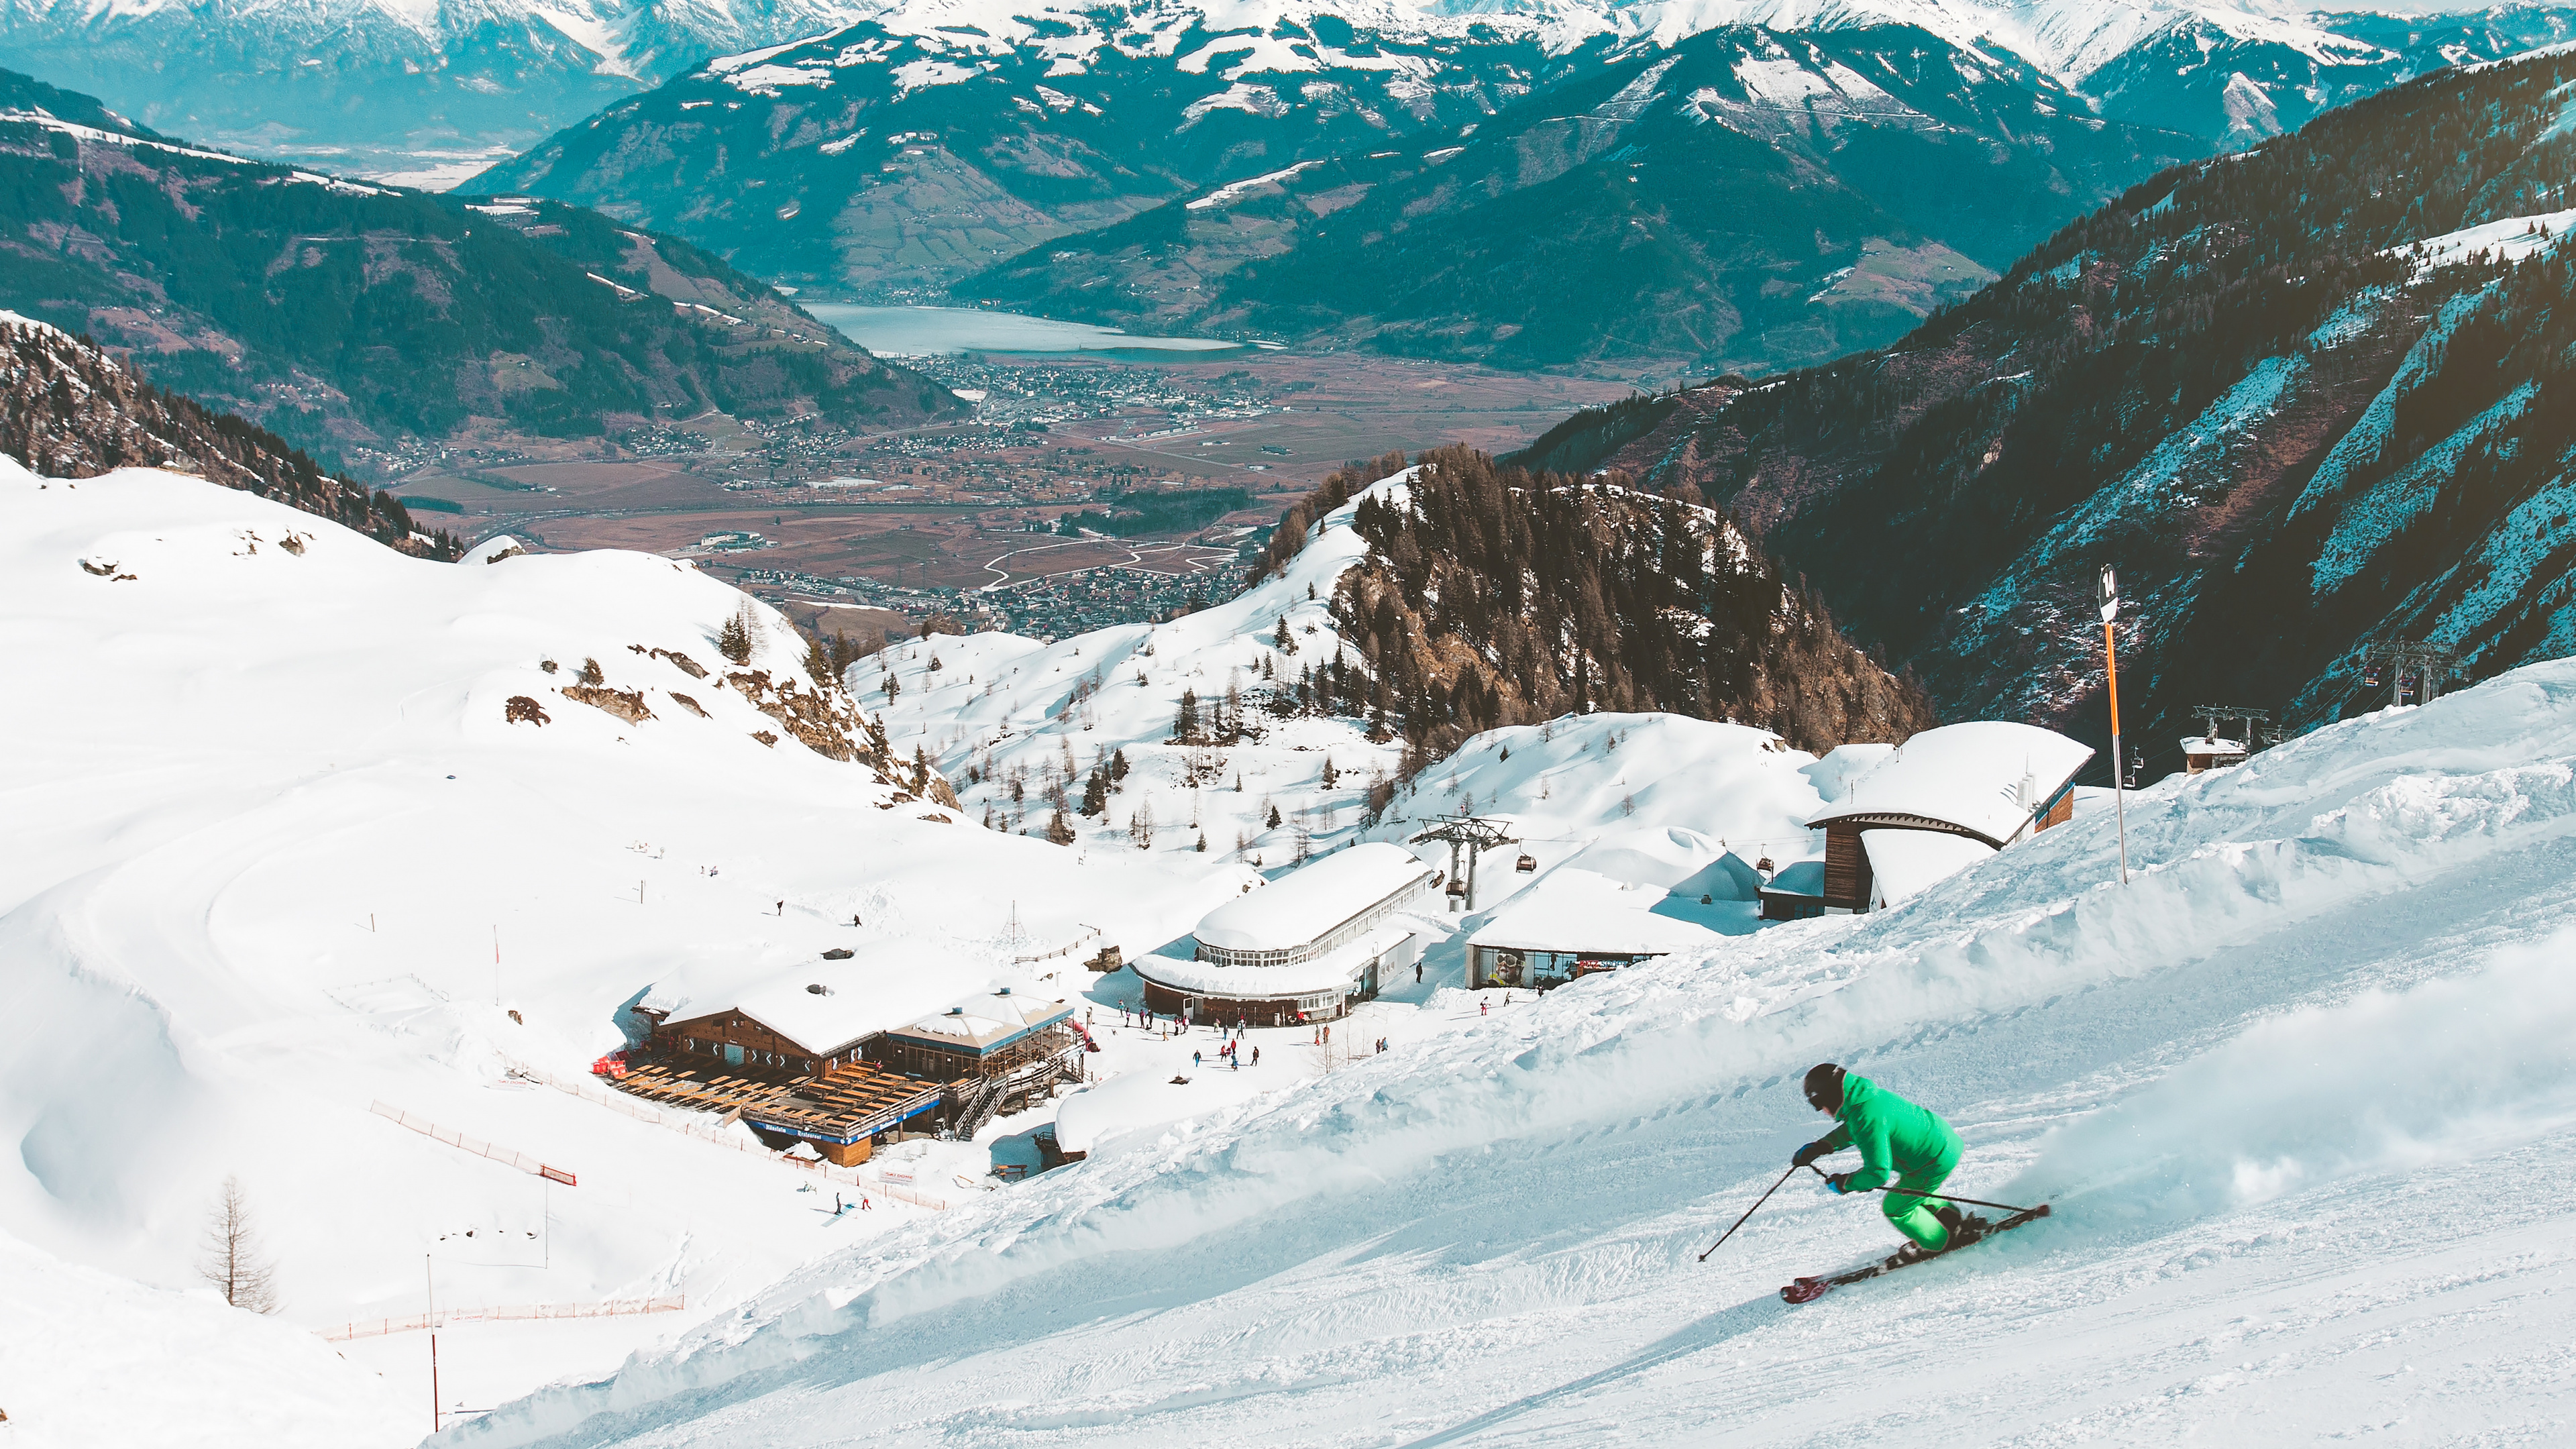 Station de Ski, Ski, Resort, Neige, Les Reliefs Montagneux. Wallpaper in 3840x2160 Resolution